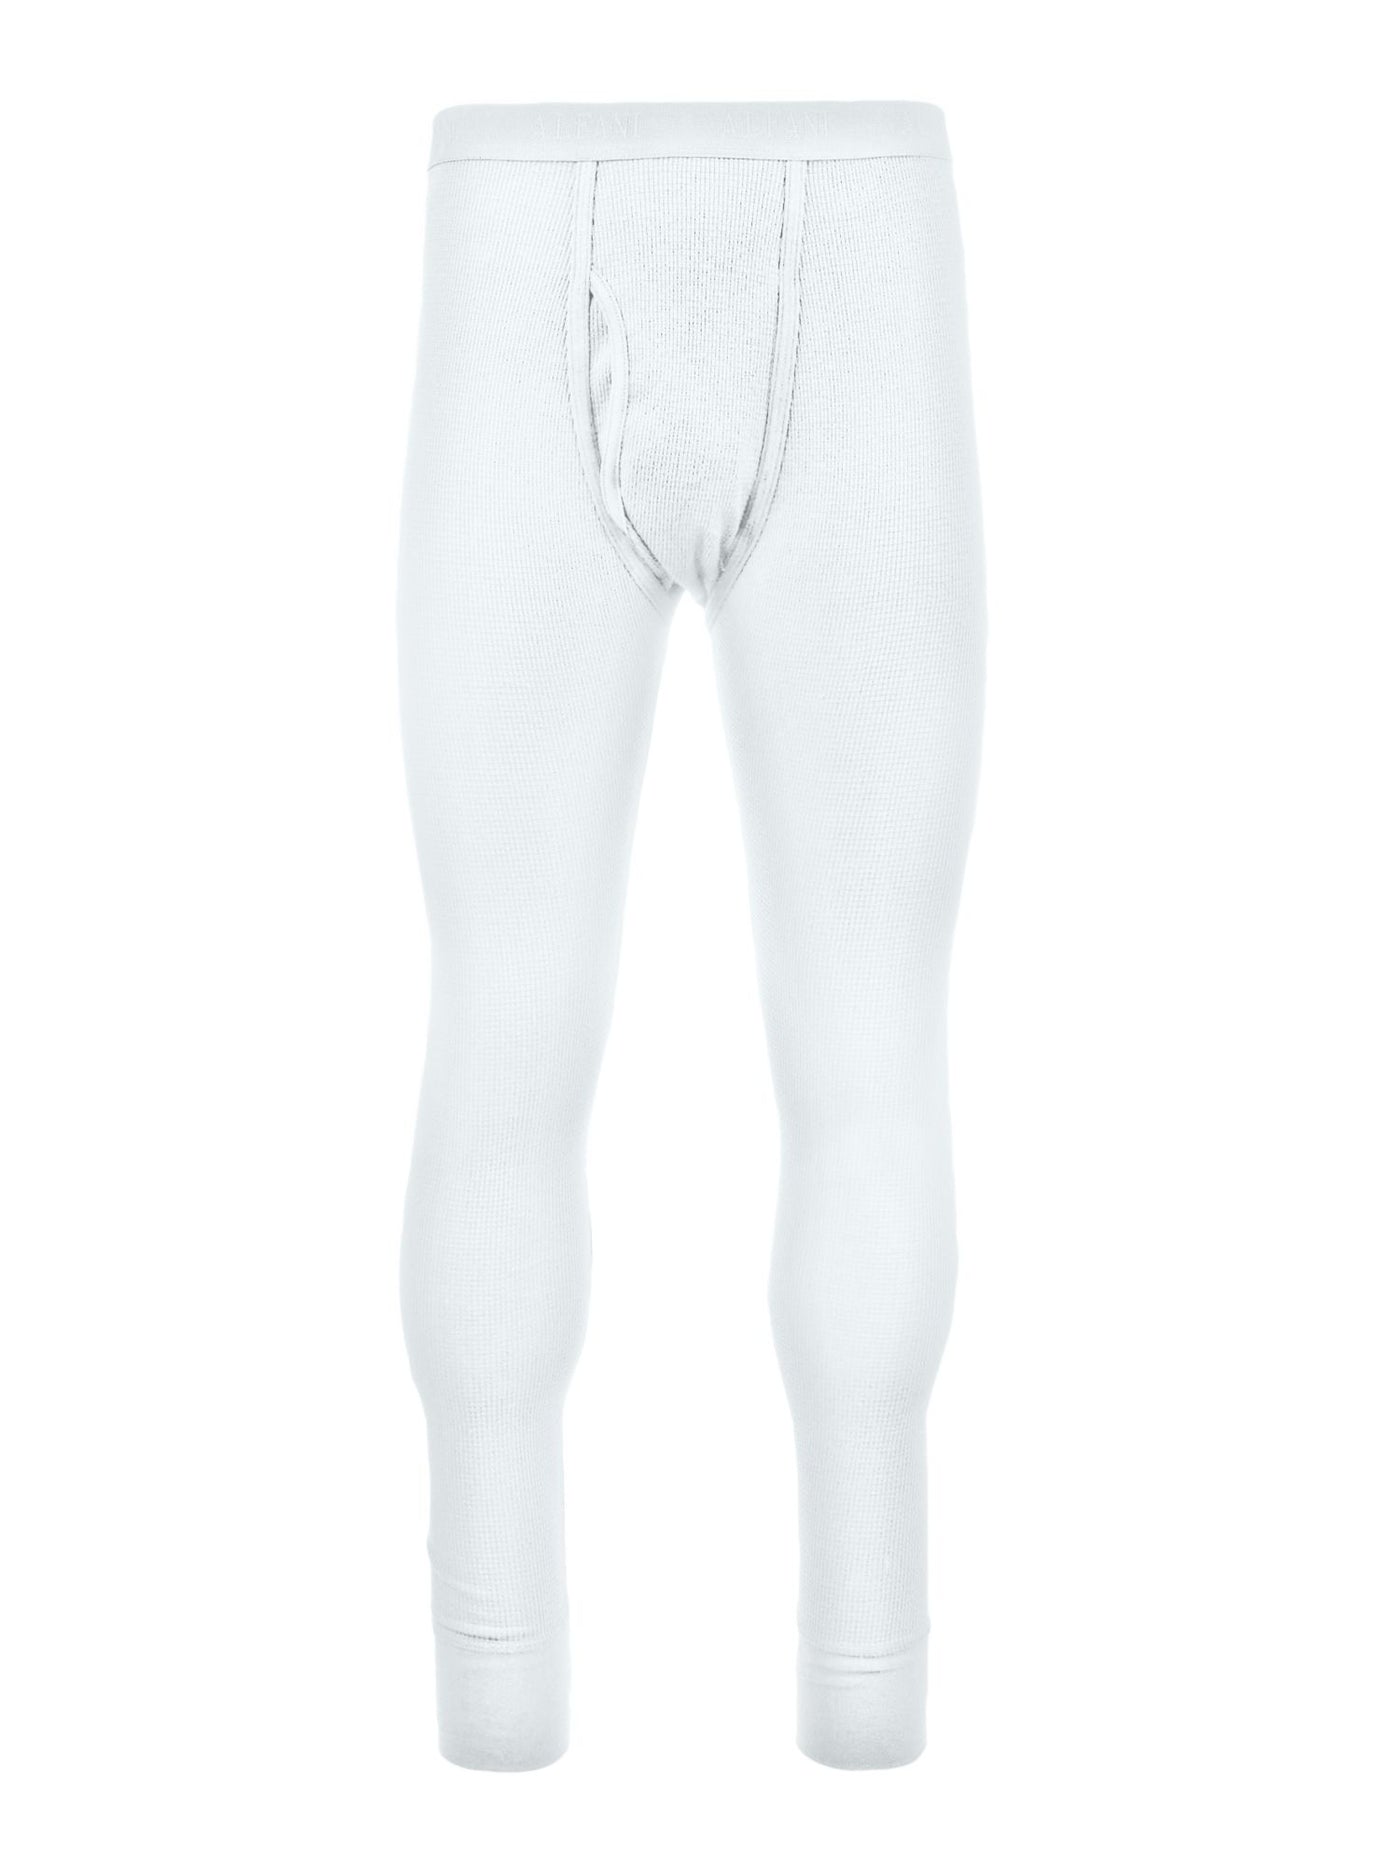 ALFANI Intimates White Thermal Underwear S